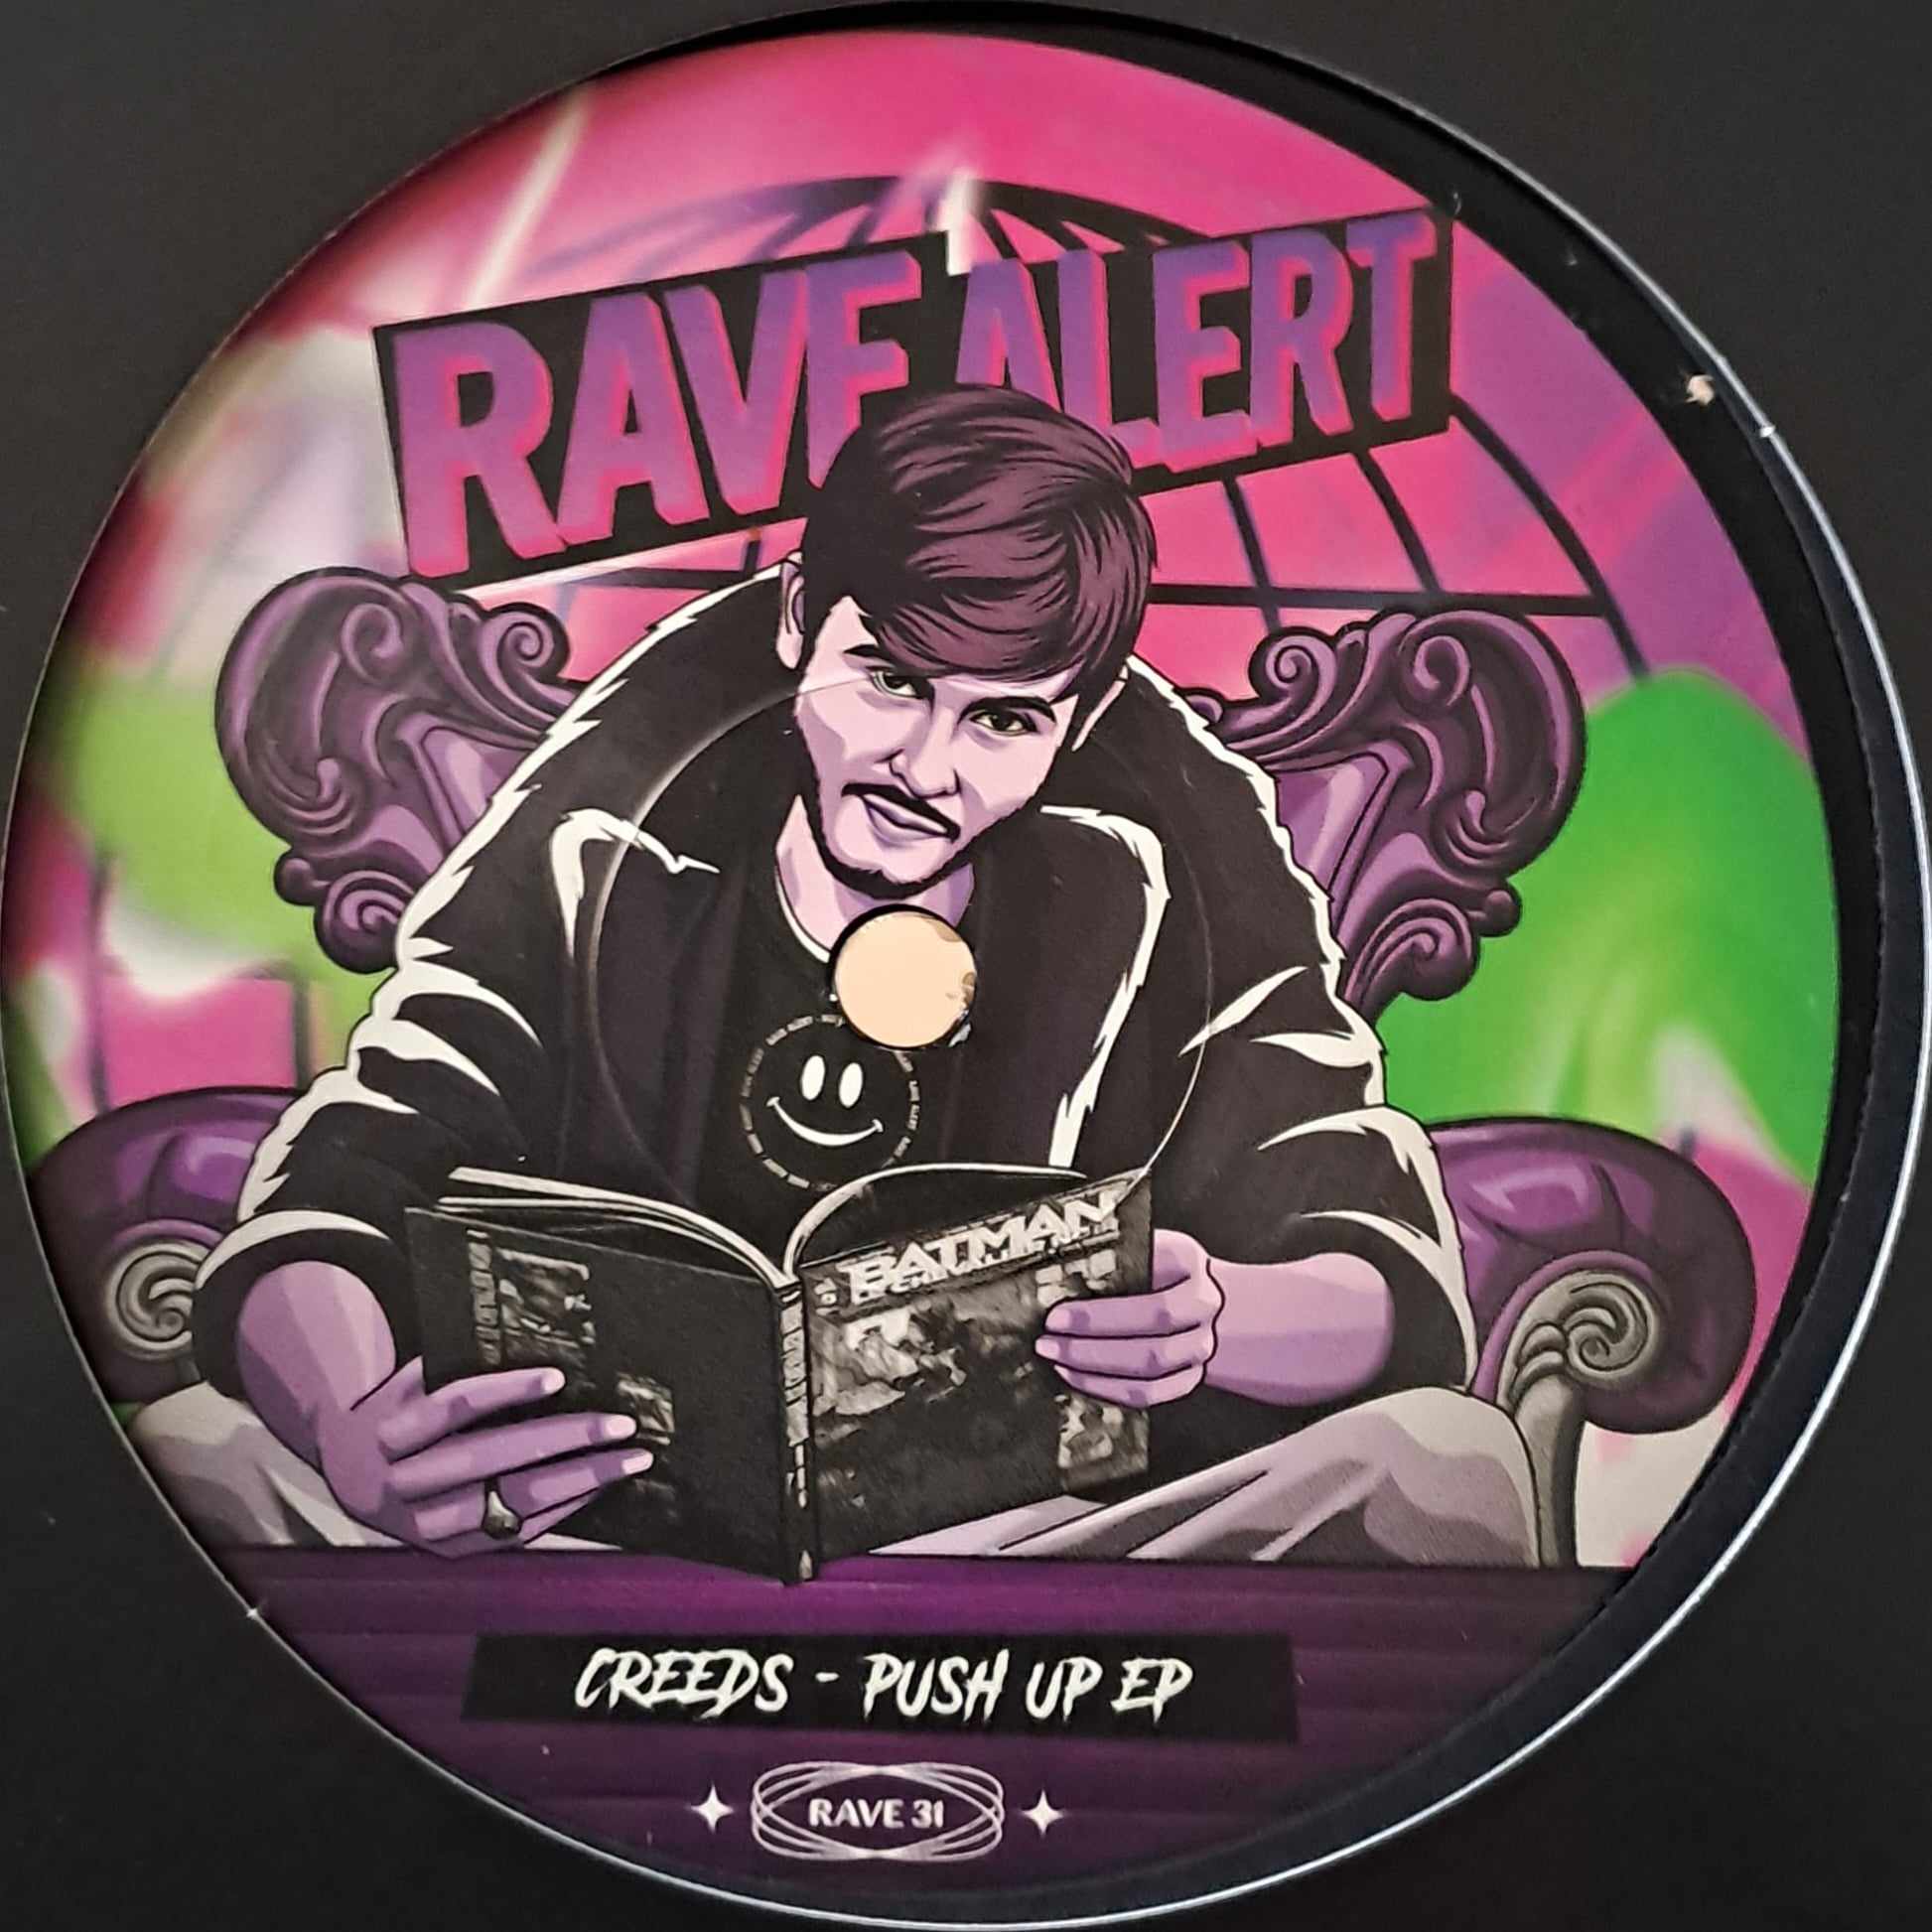 Rave Alert 31 - vinyle hard techno